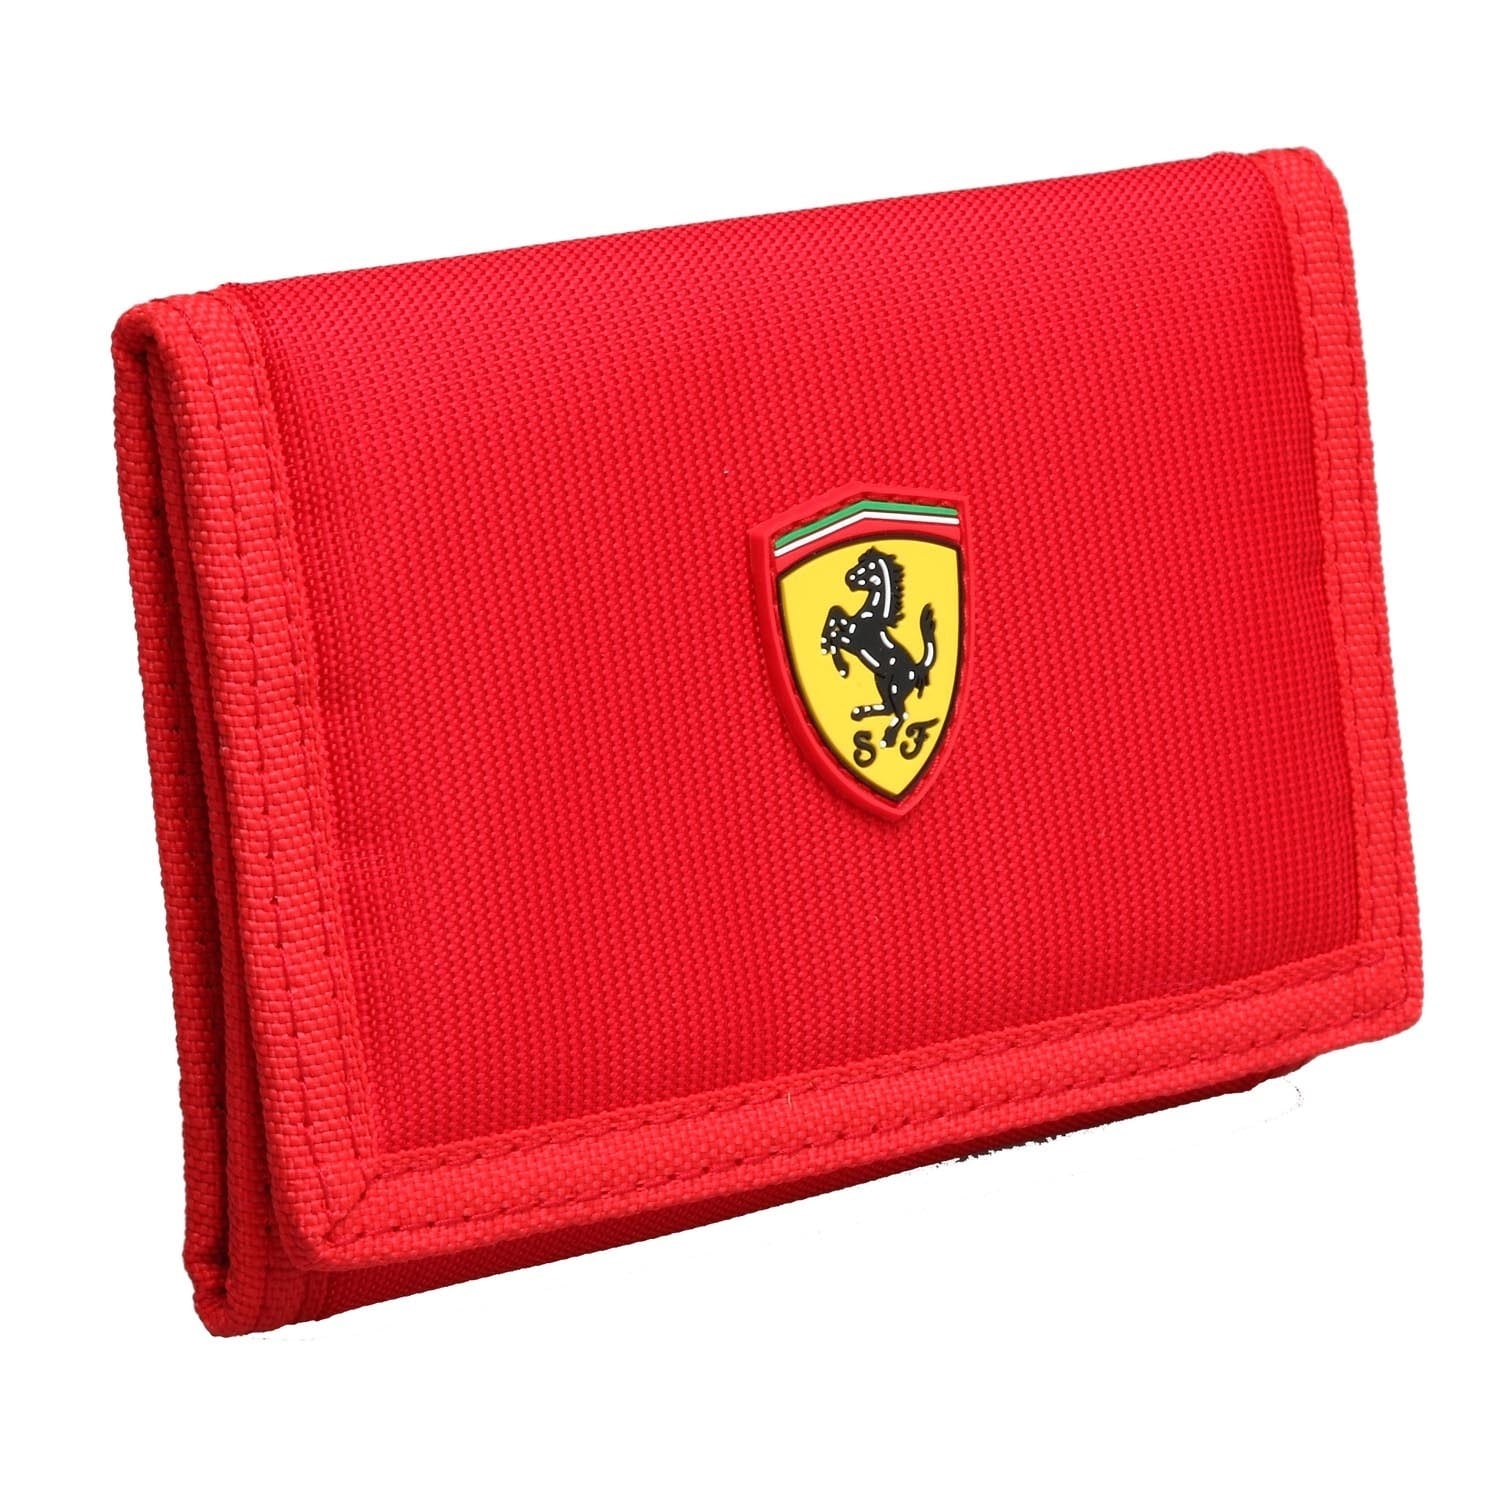 Ferrari Red Keyholder Wallet (RedDimensions 5.2 inches x 3.2 inches Weight 3.5 ouncesInterior pockets Zip pocket, ID slot, billfold pocket, built in key ring )